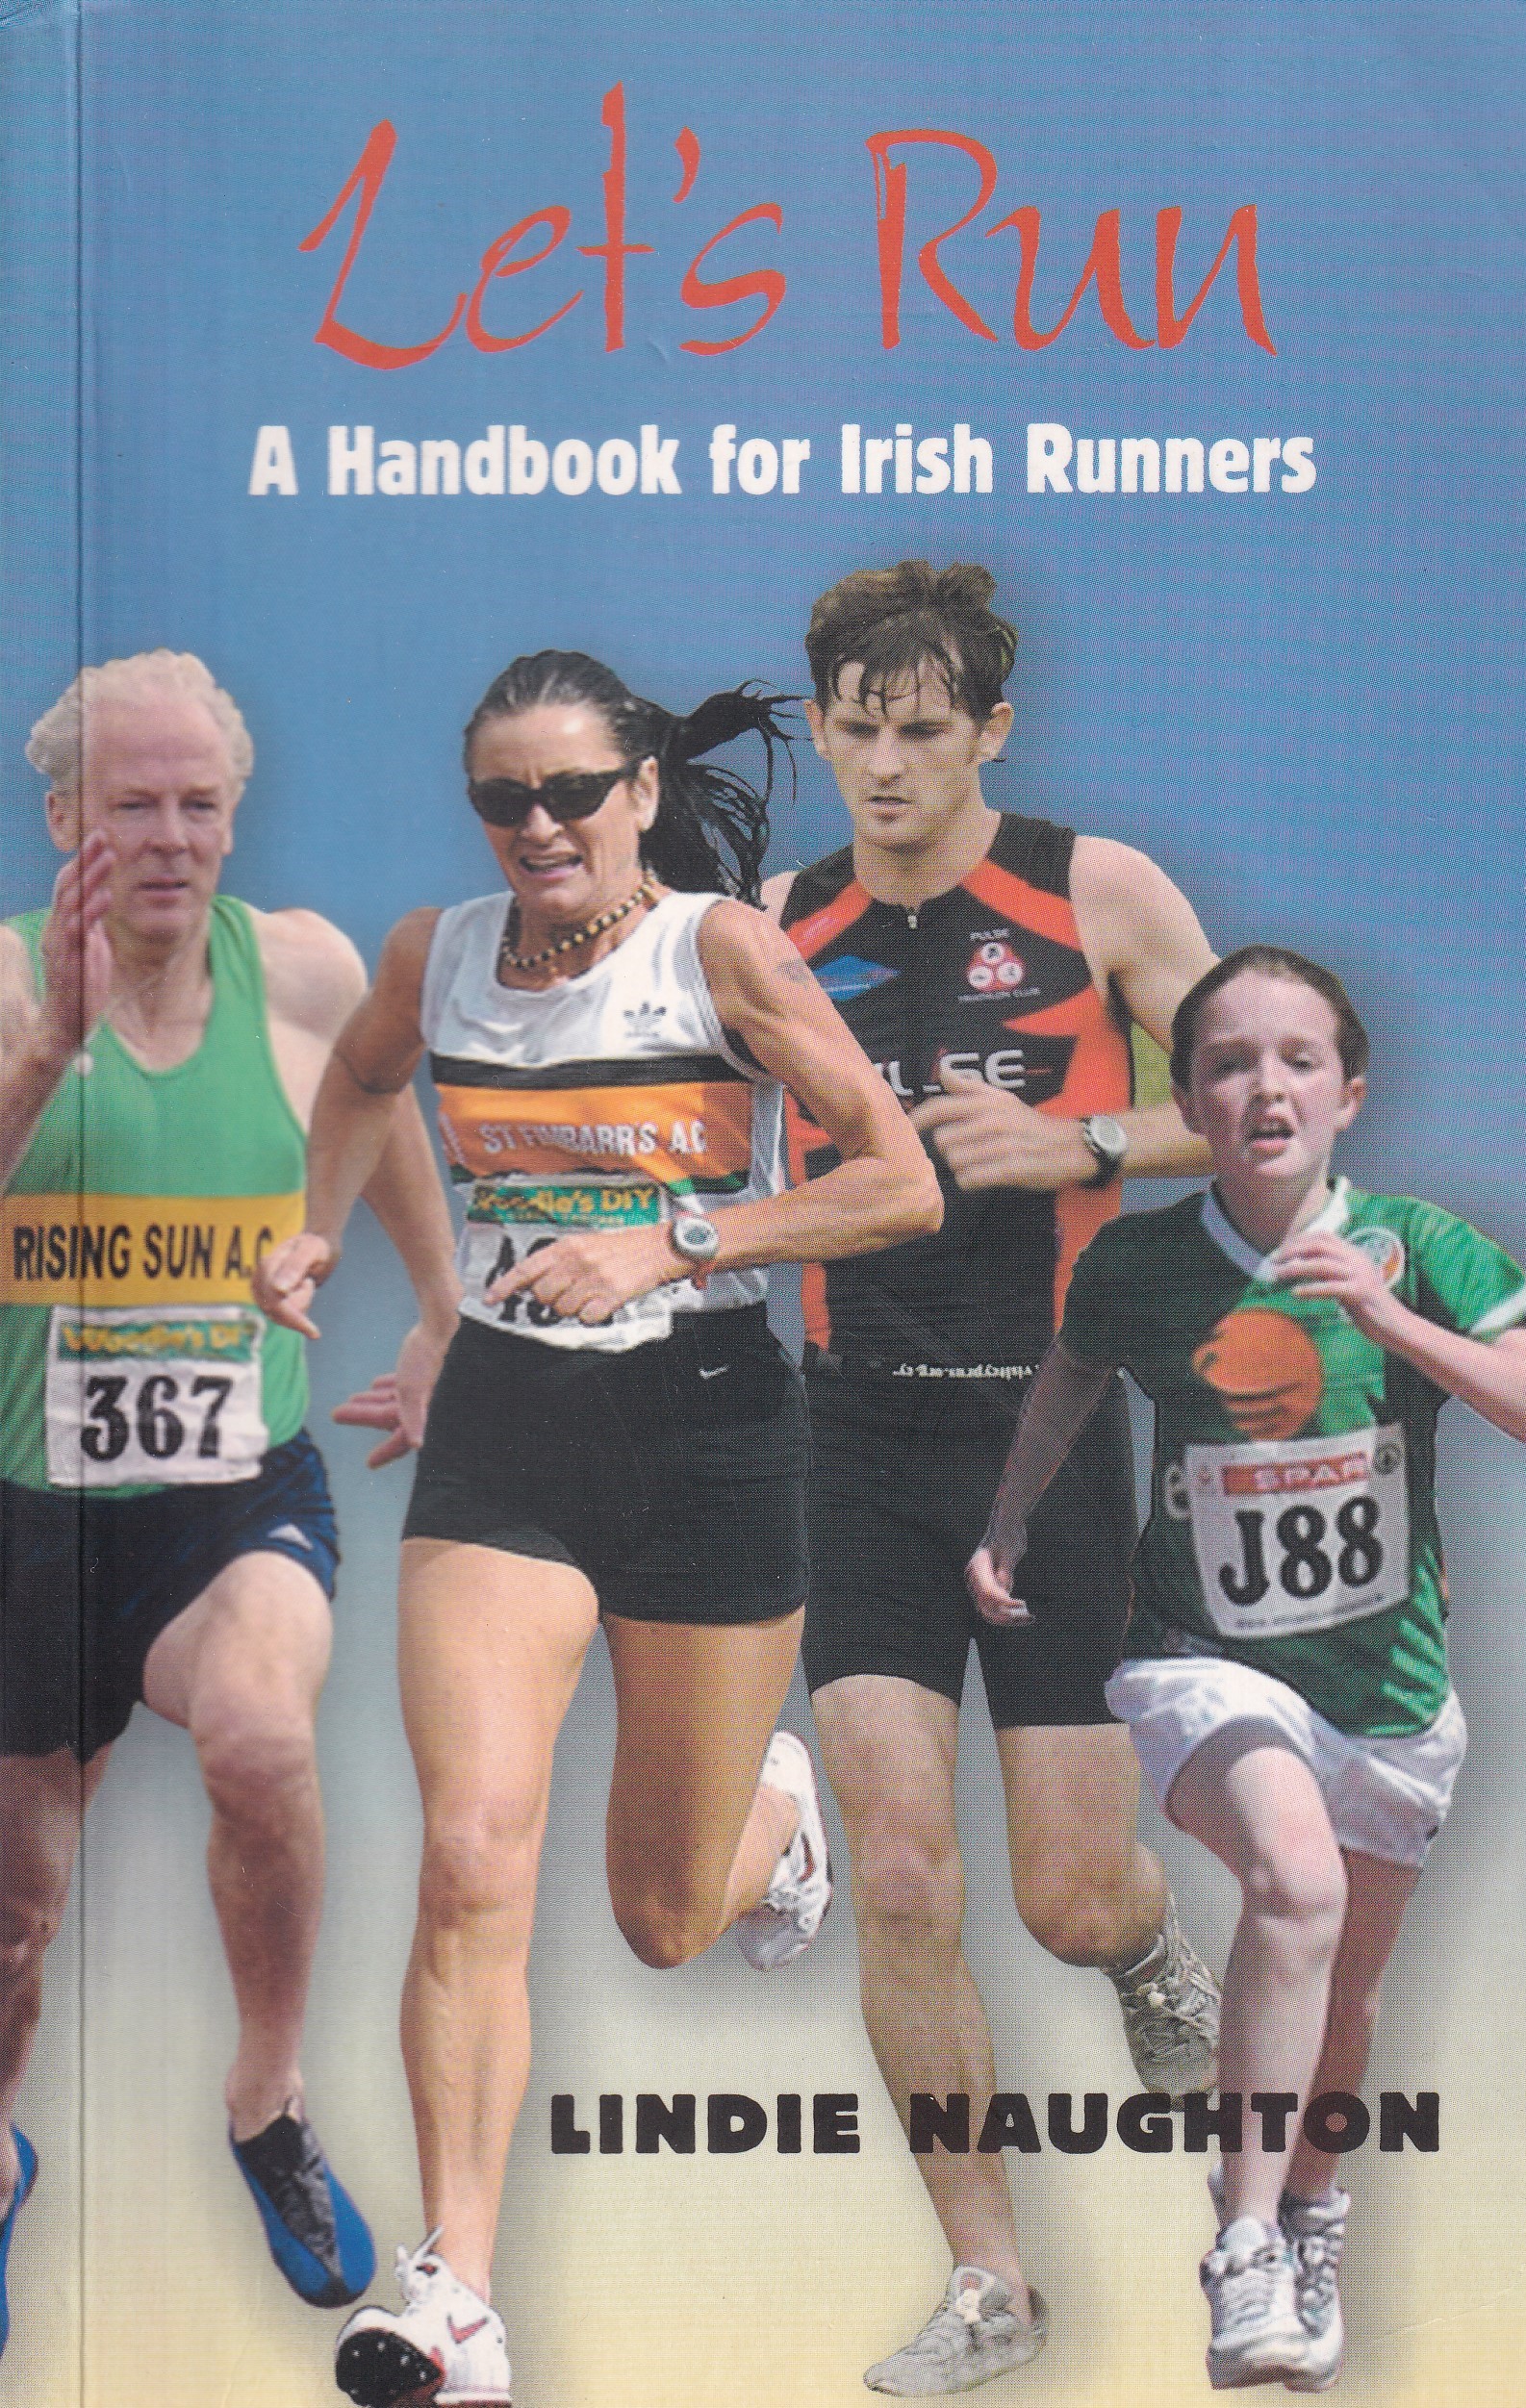 Let’s Run: A Handbook for Irish Runners by Lindie Naughton